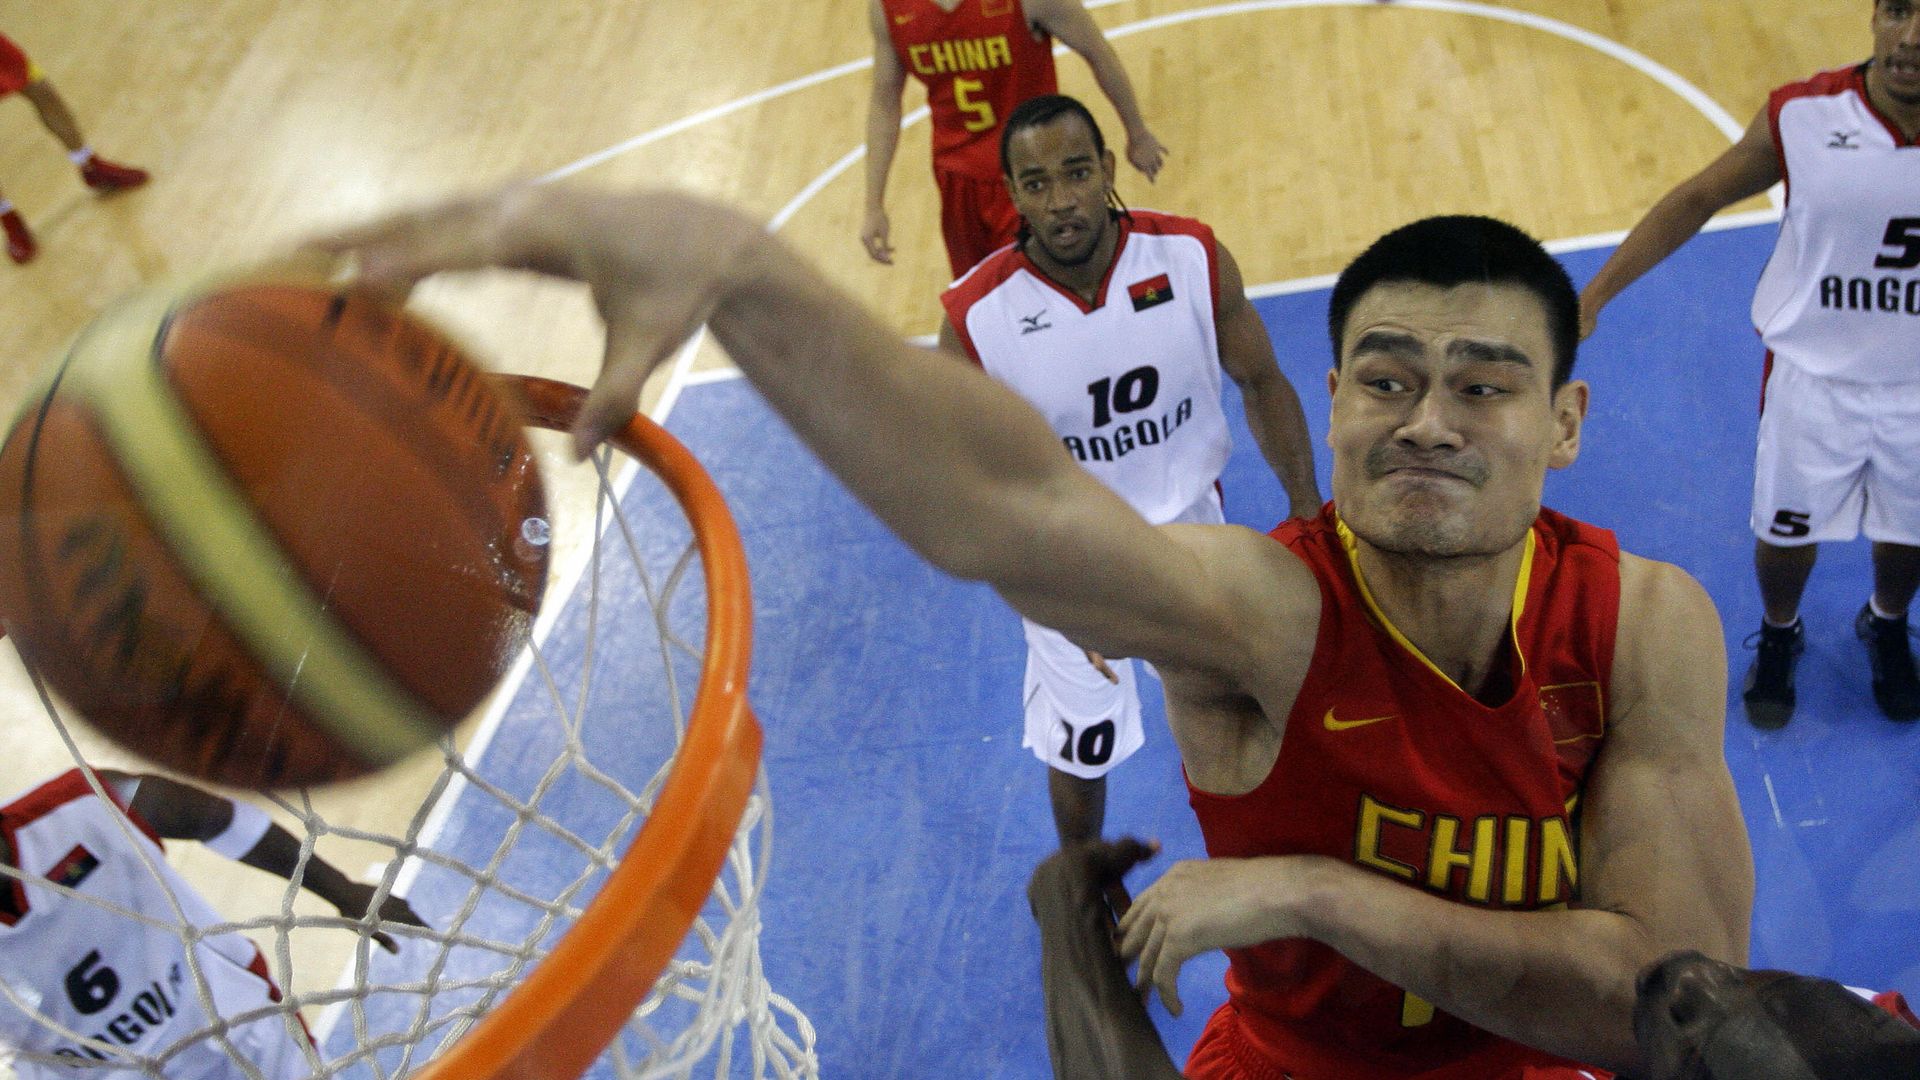 Photo of Chinese basketball player Yao Ming dunking